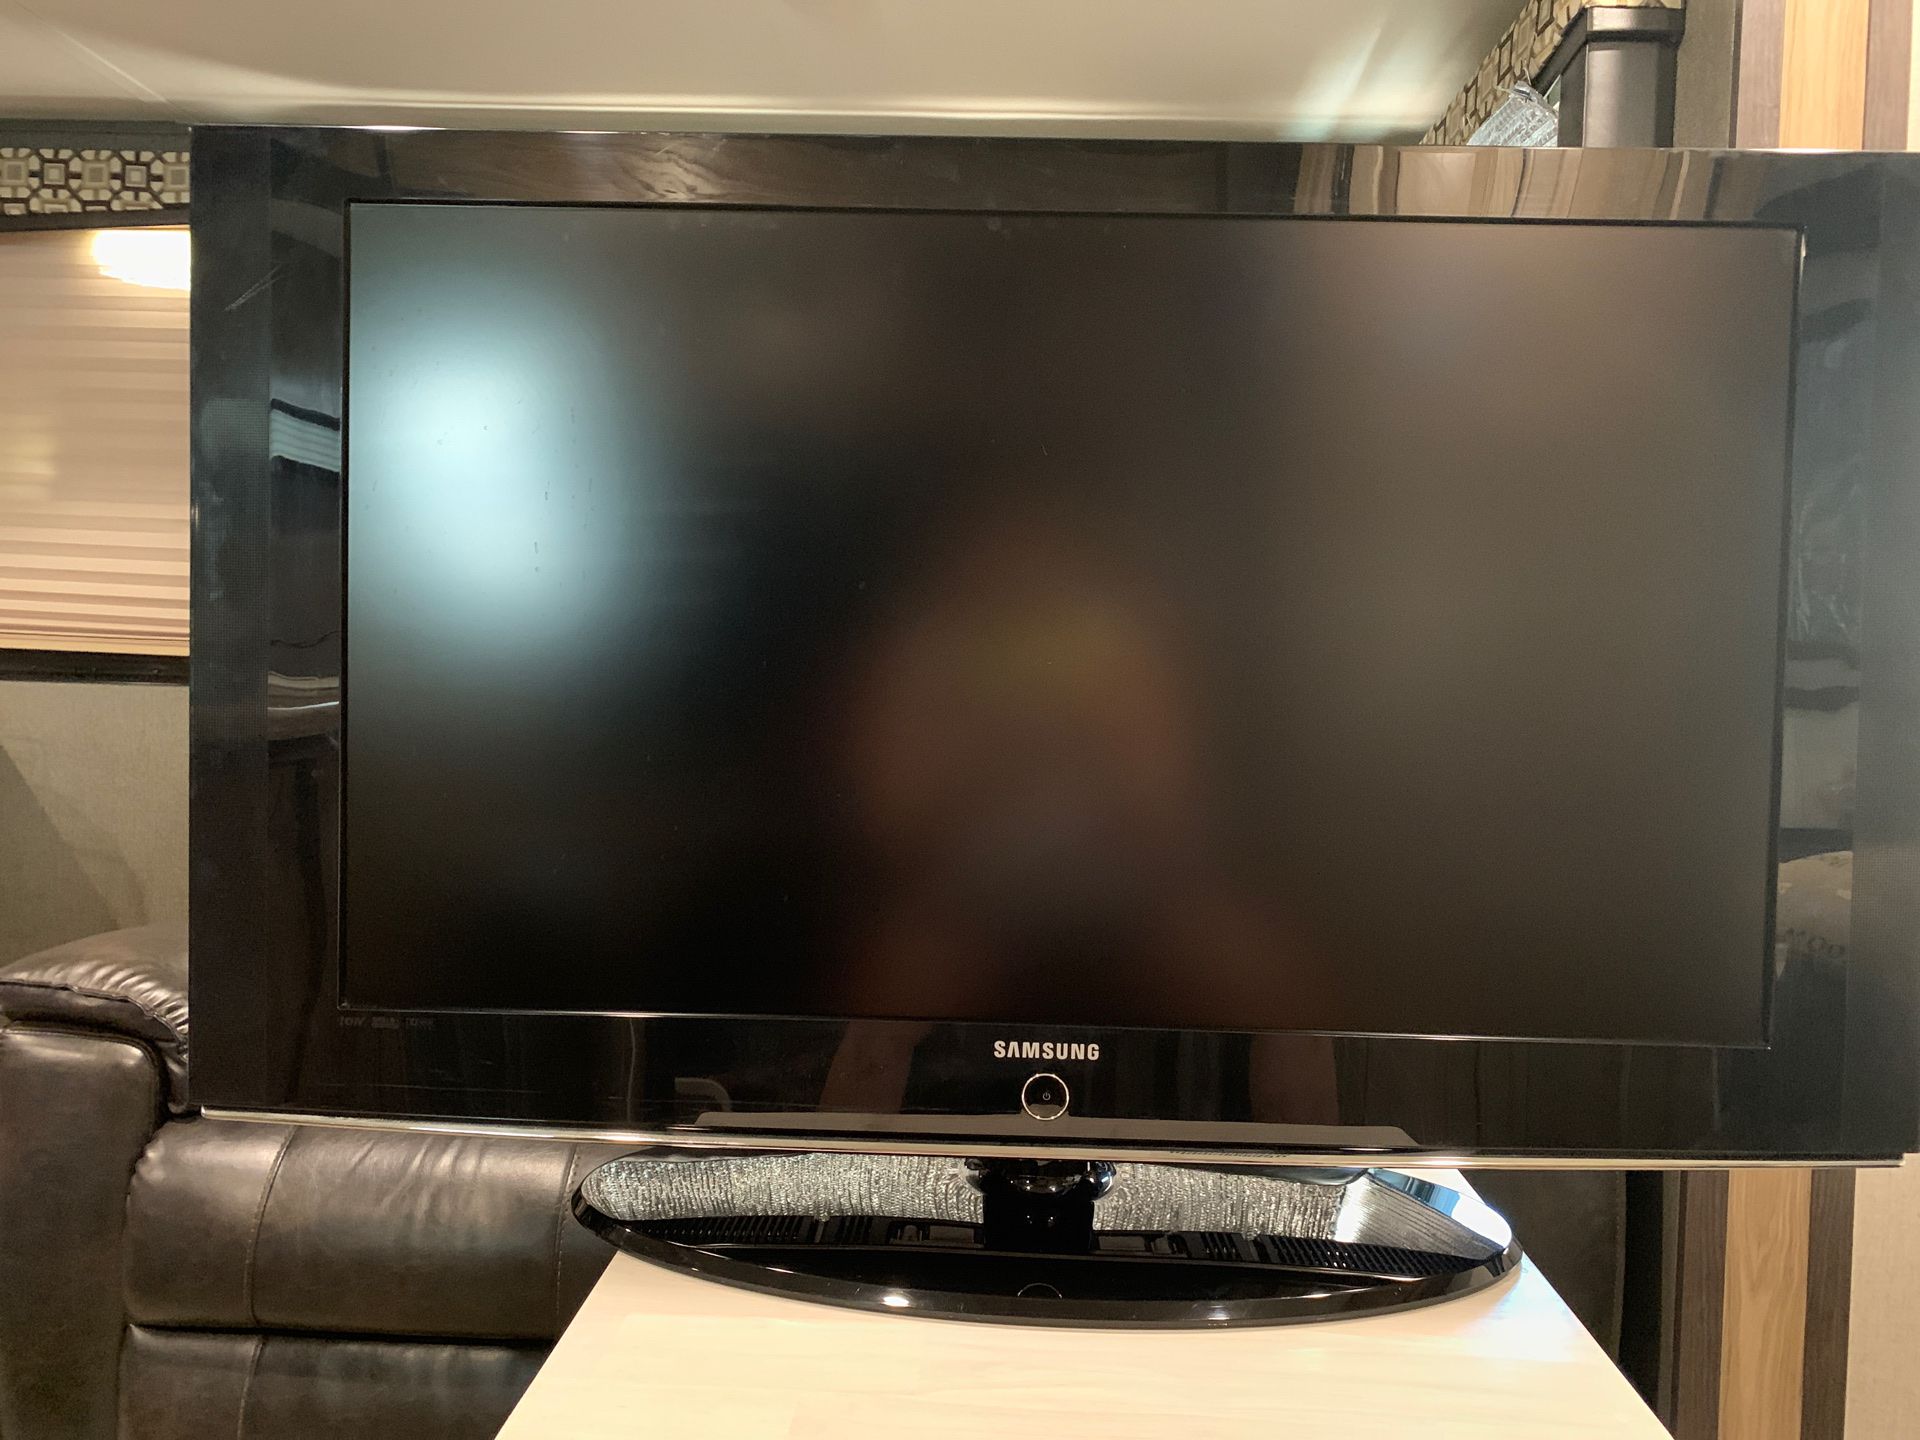 Samsung television. LCD TV. 40 inch. 3 HDMI ports.